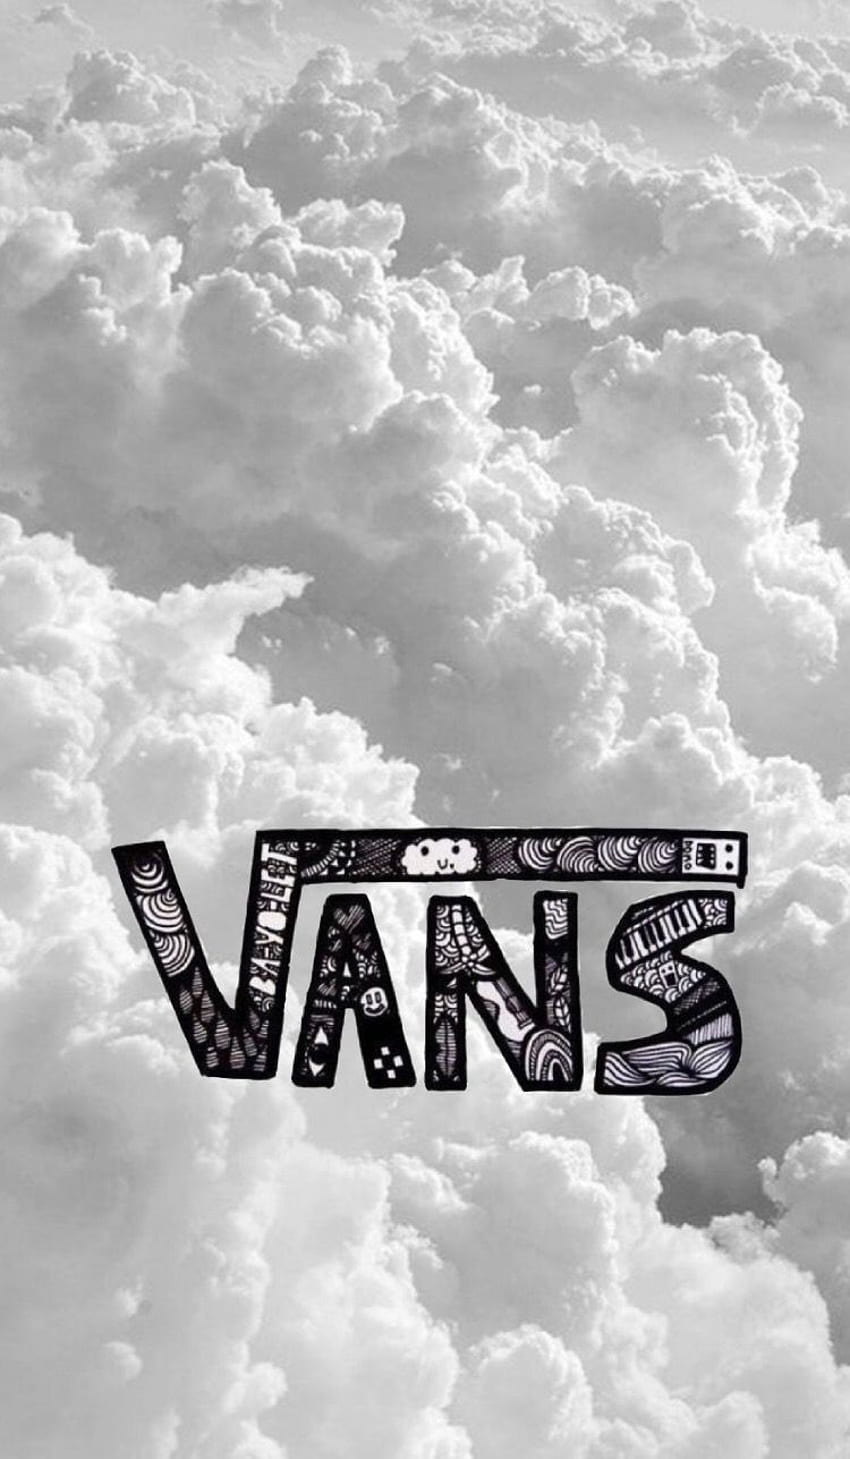 Vans logo in the clouds - Vans